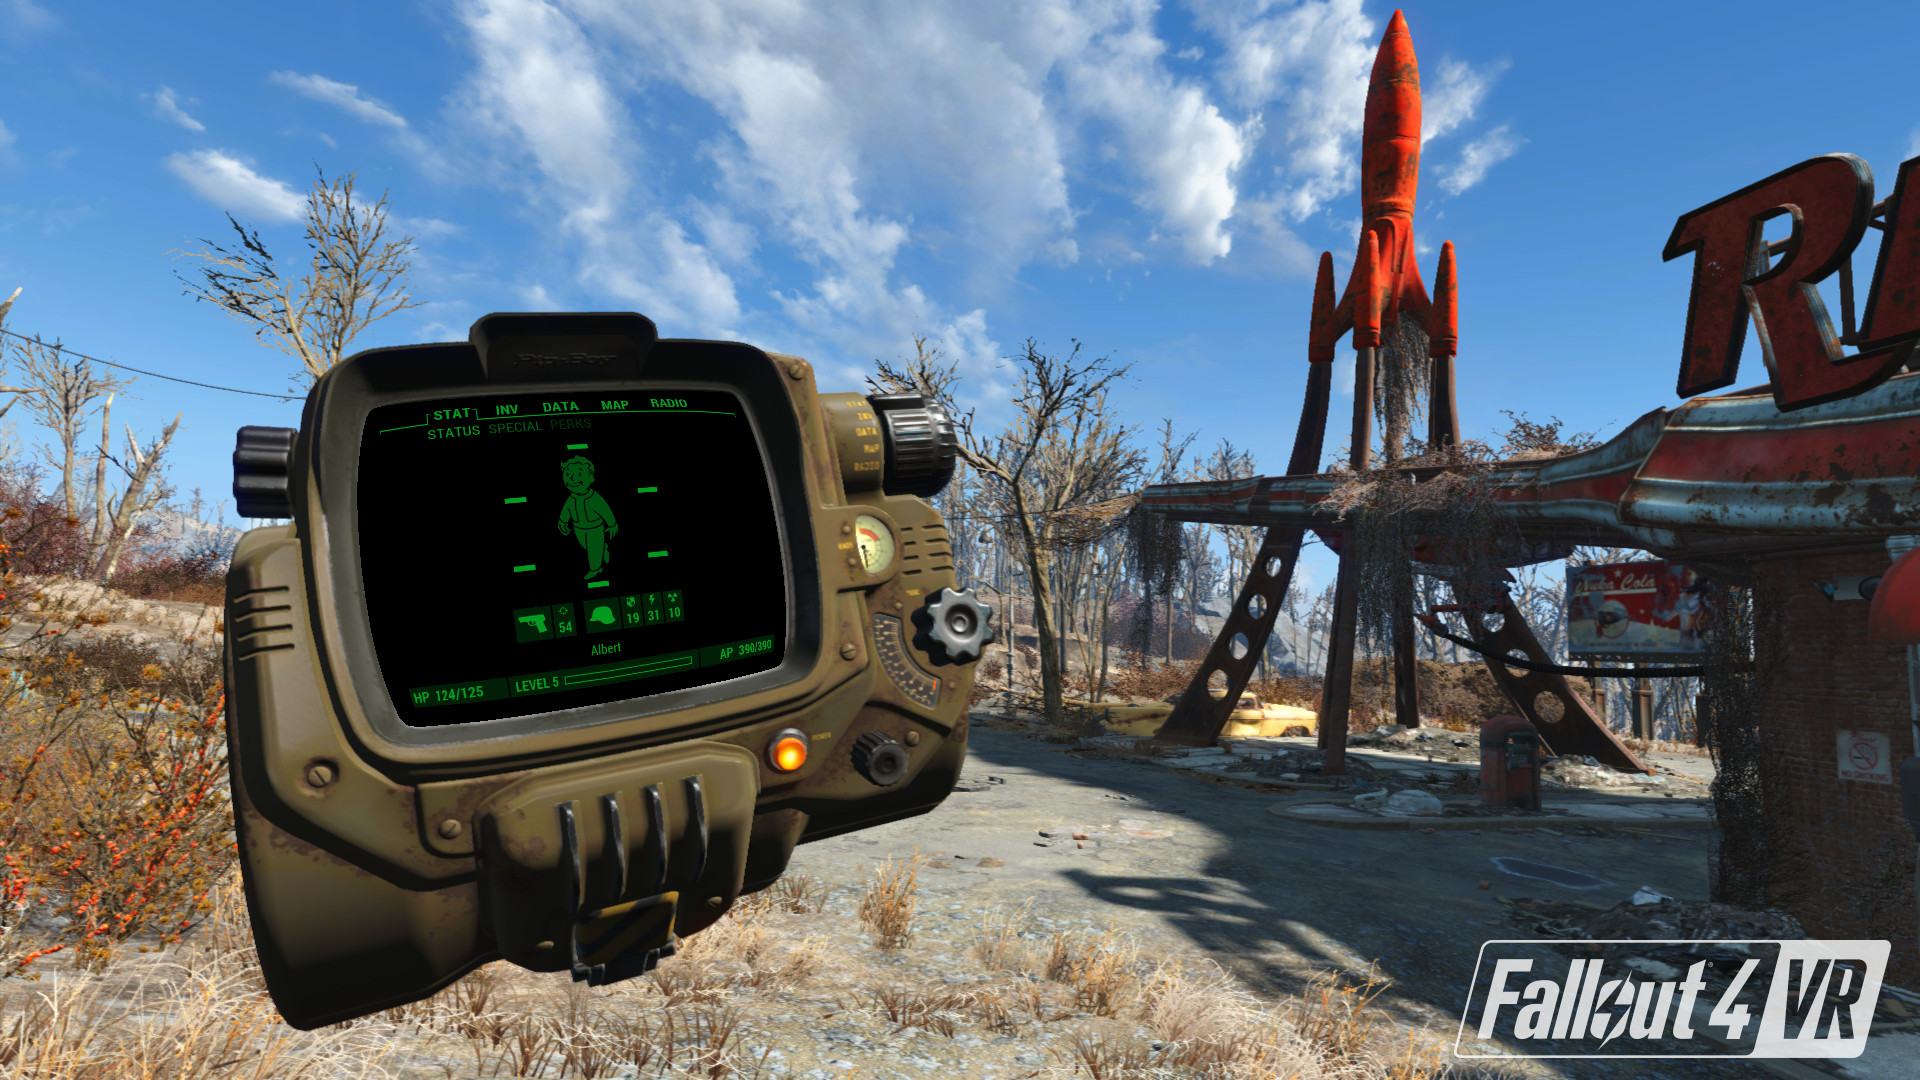 2333VR | 辐射4VR（Fallout 4 VR）HTC VIVE